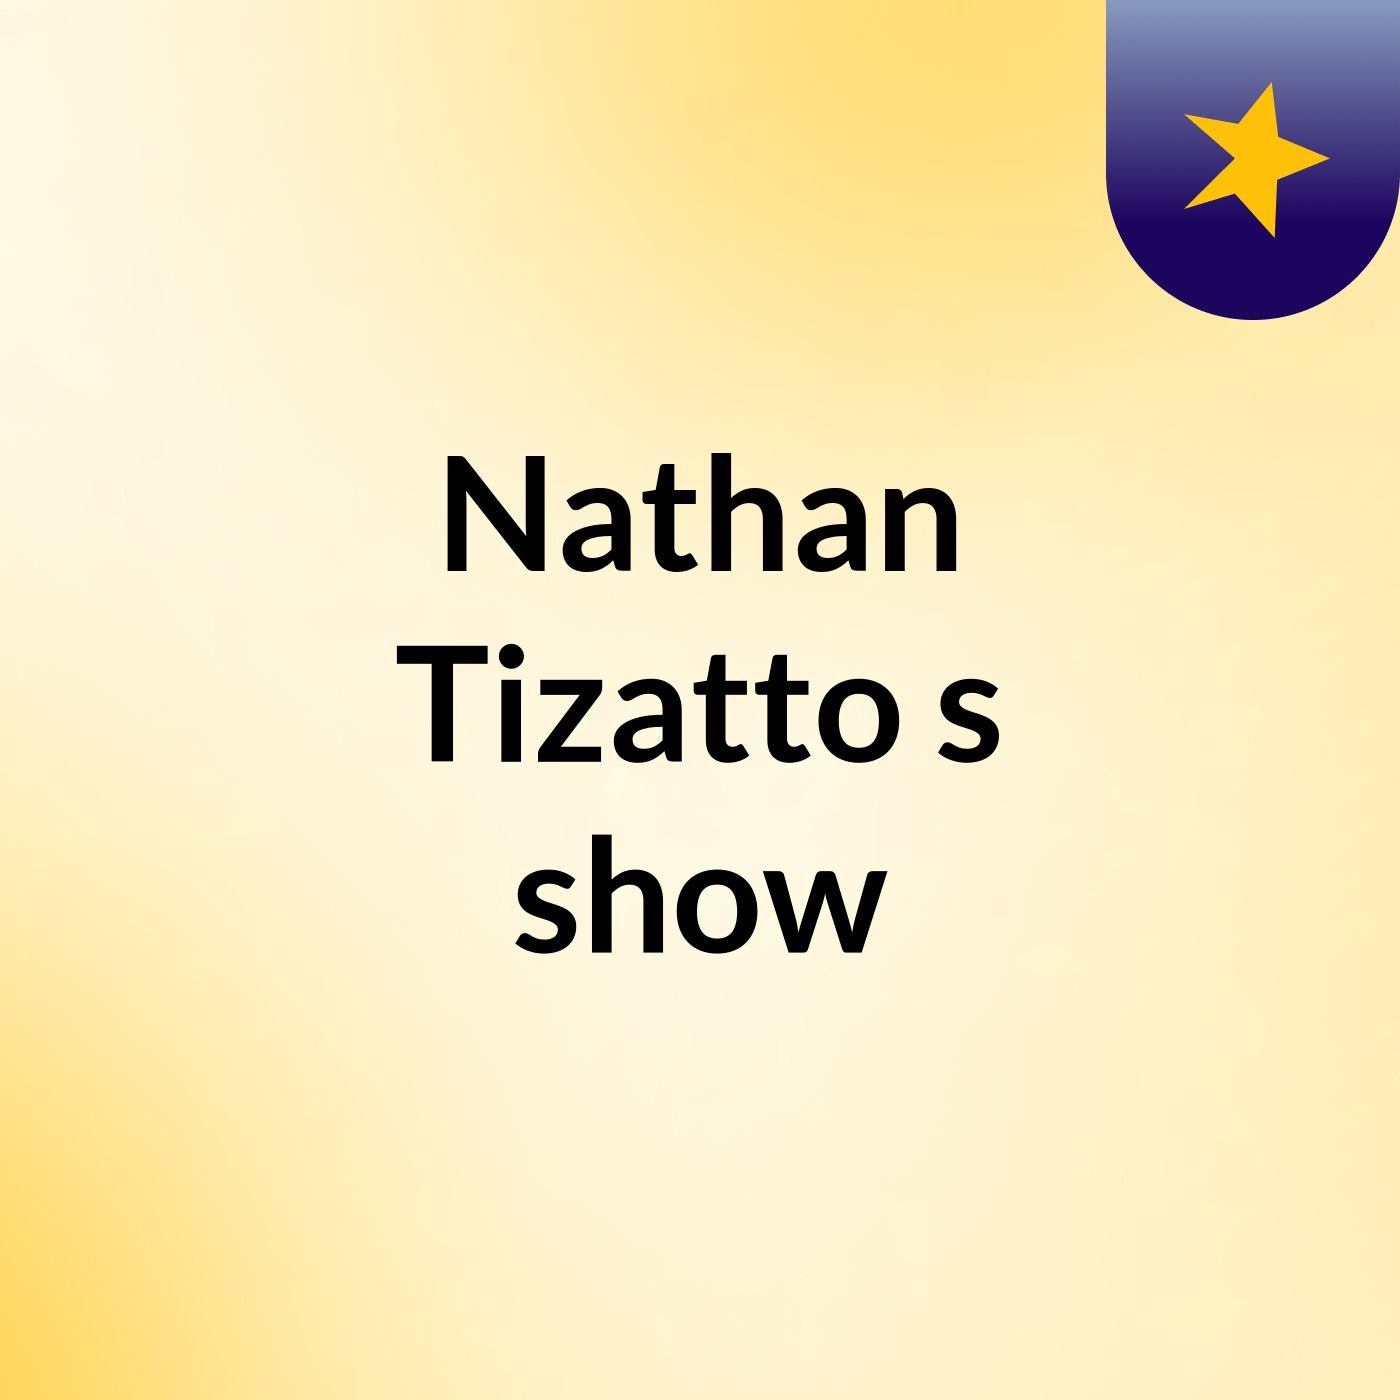 Nathan Tizatto's show